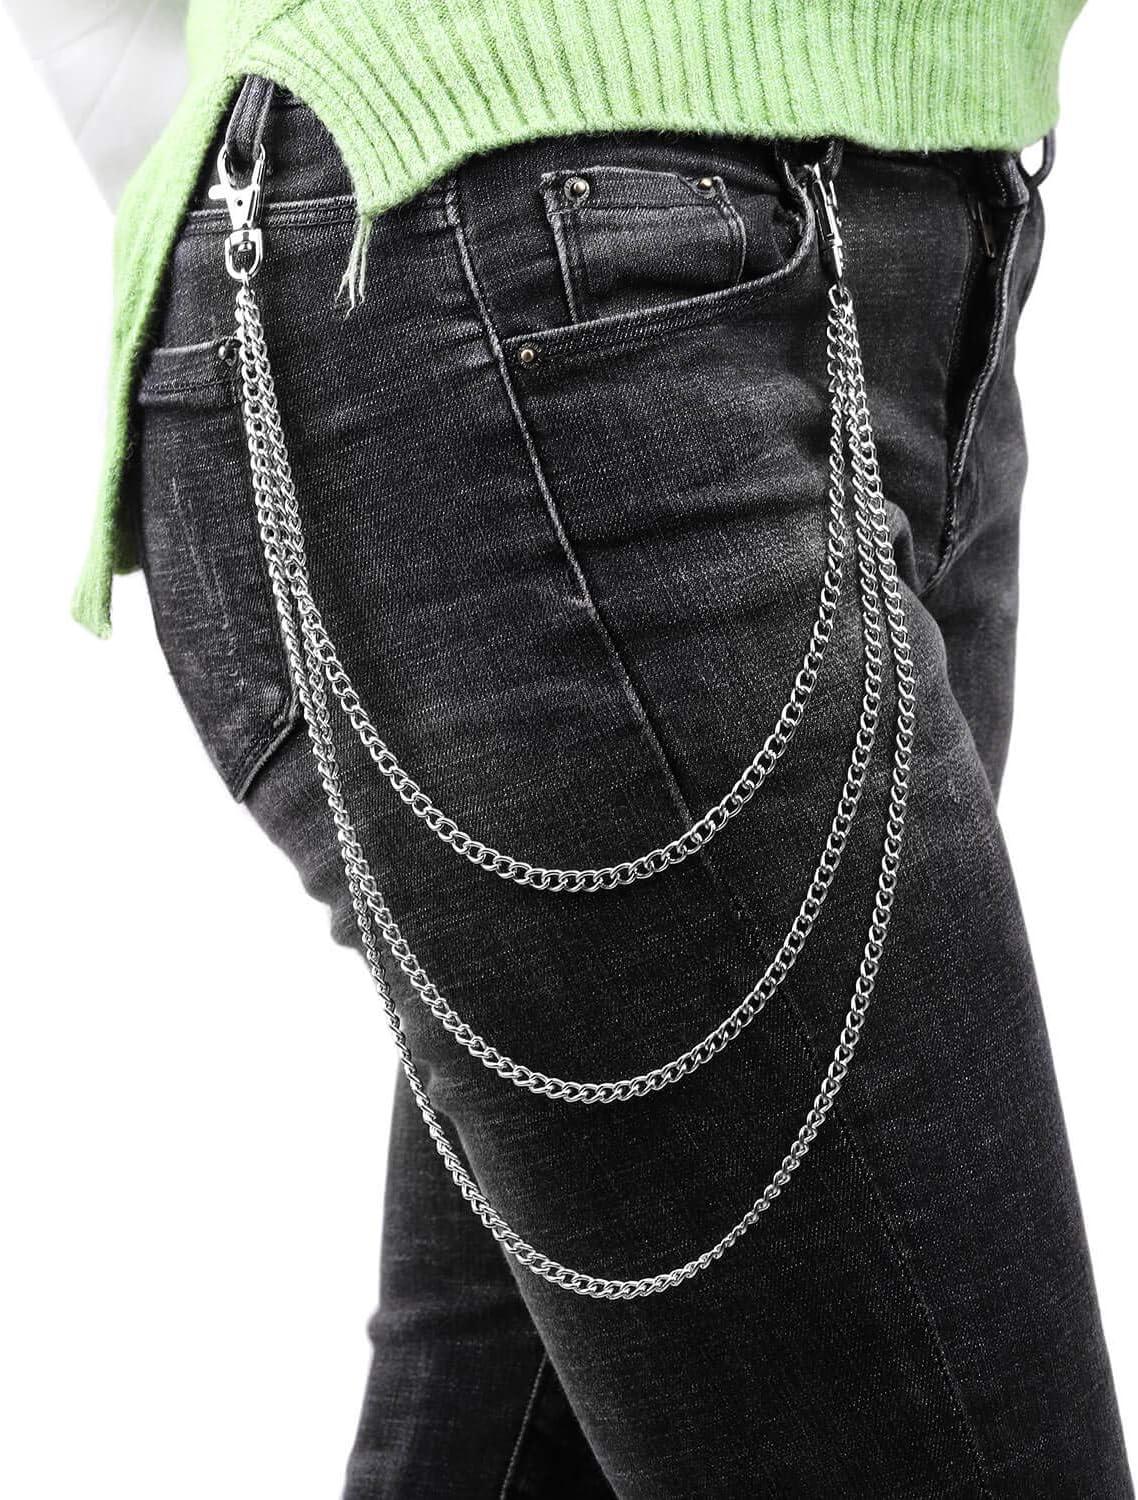 3pcs Belt Chain, Pocket Chain, Chains for Wallet, Pants, Jeans, Goth